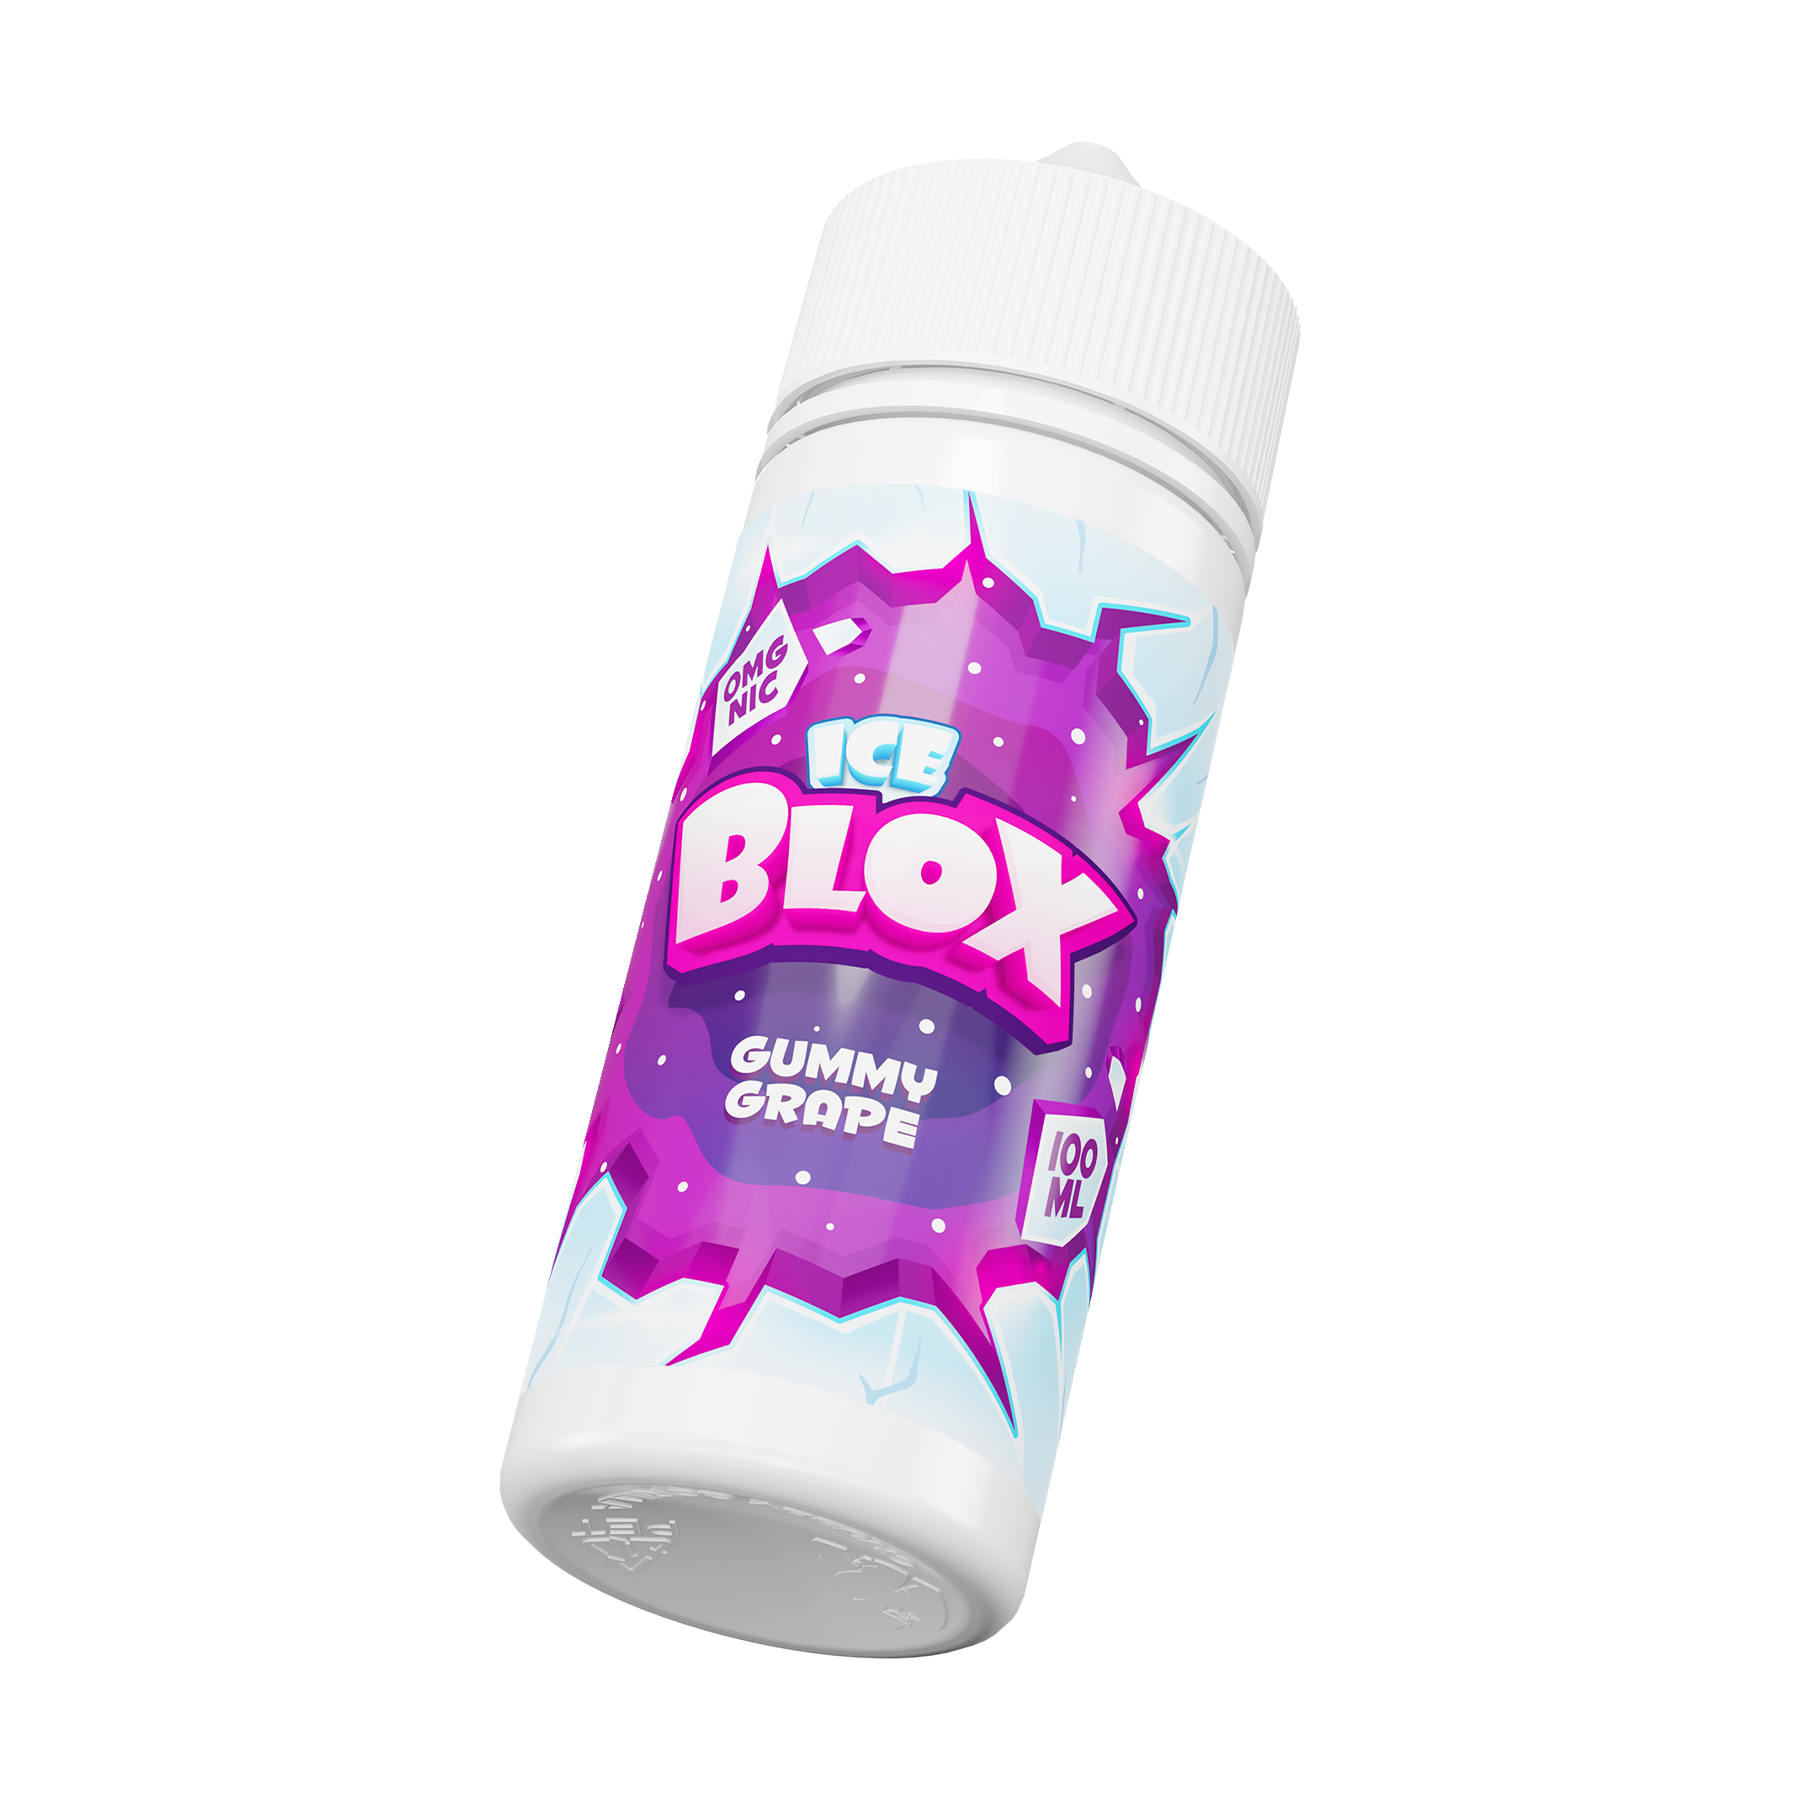 Ice Blox - Gummy Grape 100ml E Liquid Shortfill